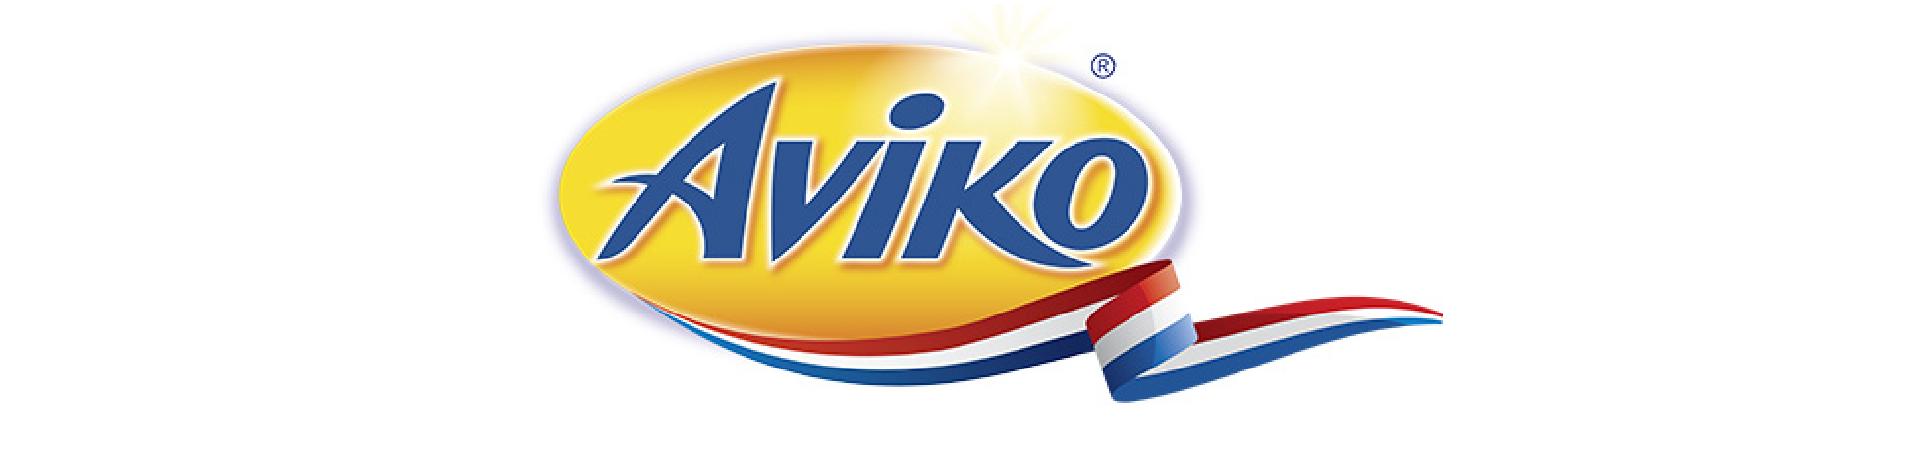 Partnership with Aviko